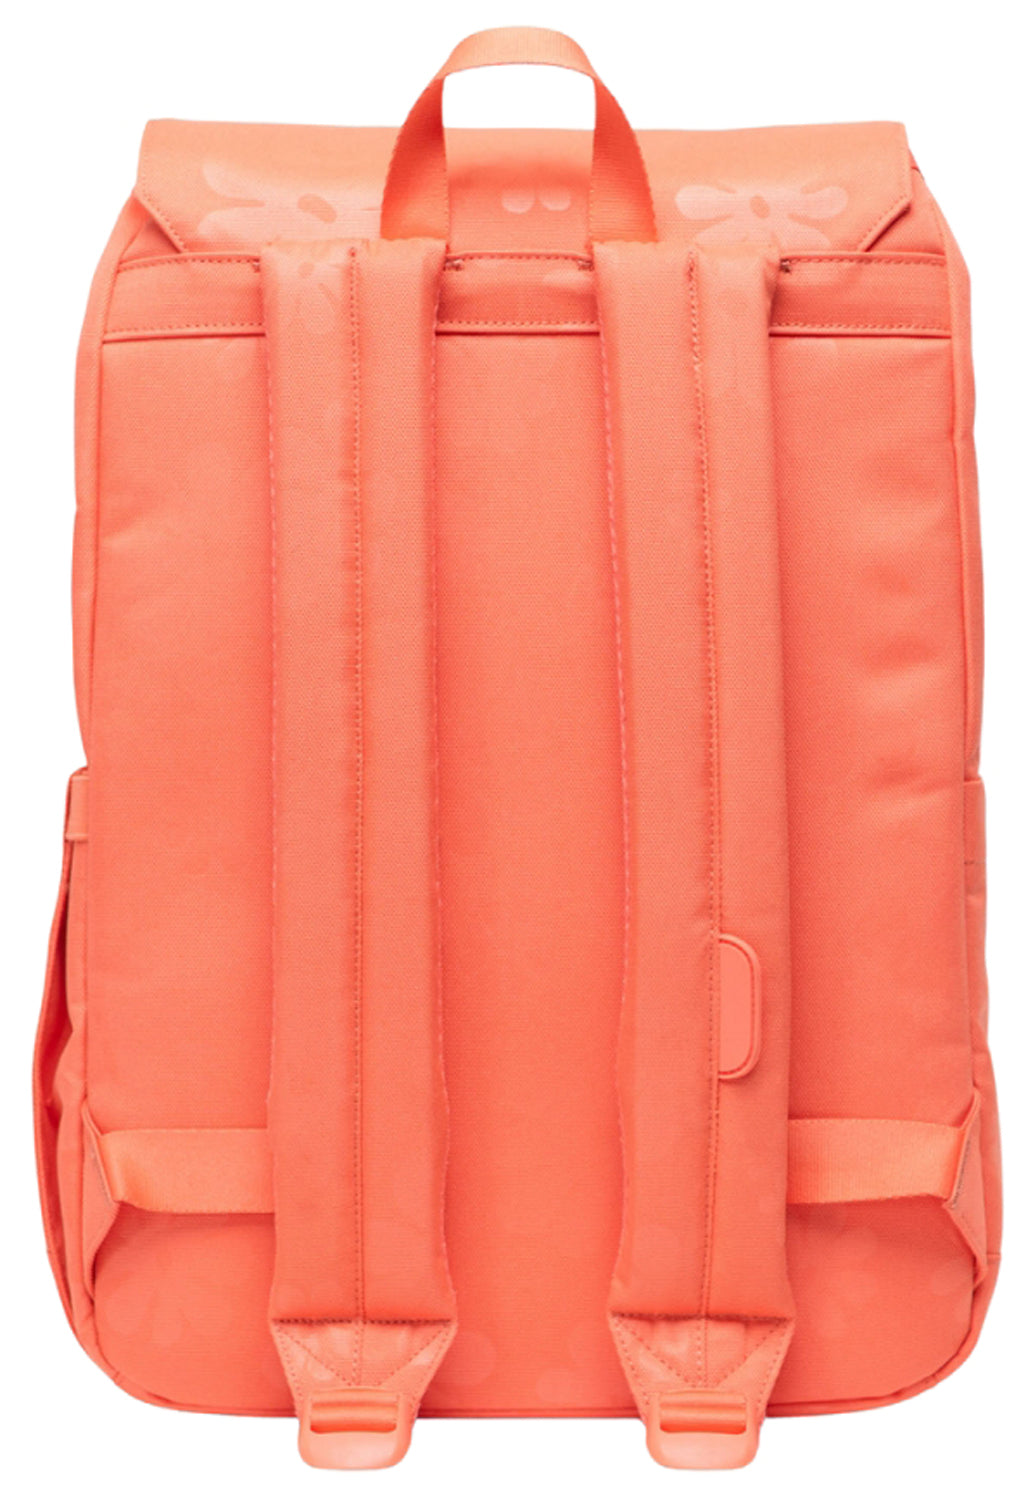 Herschel Retreat Small Backpack - Coral